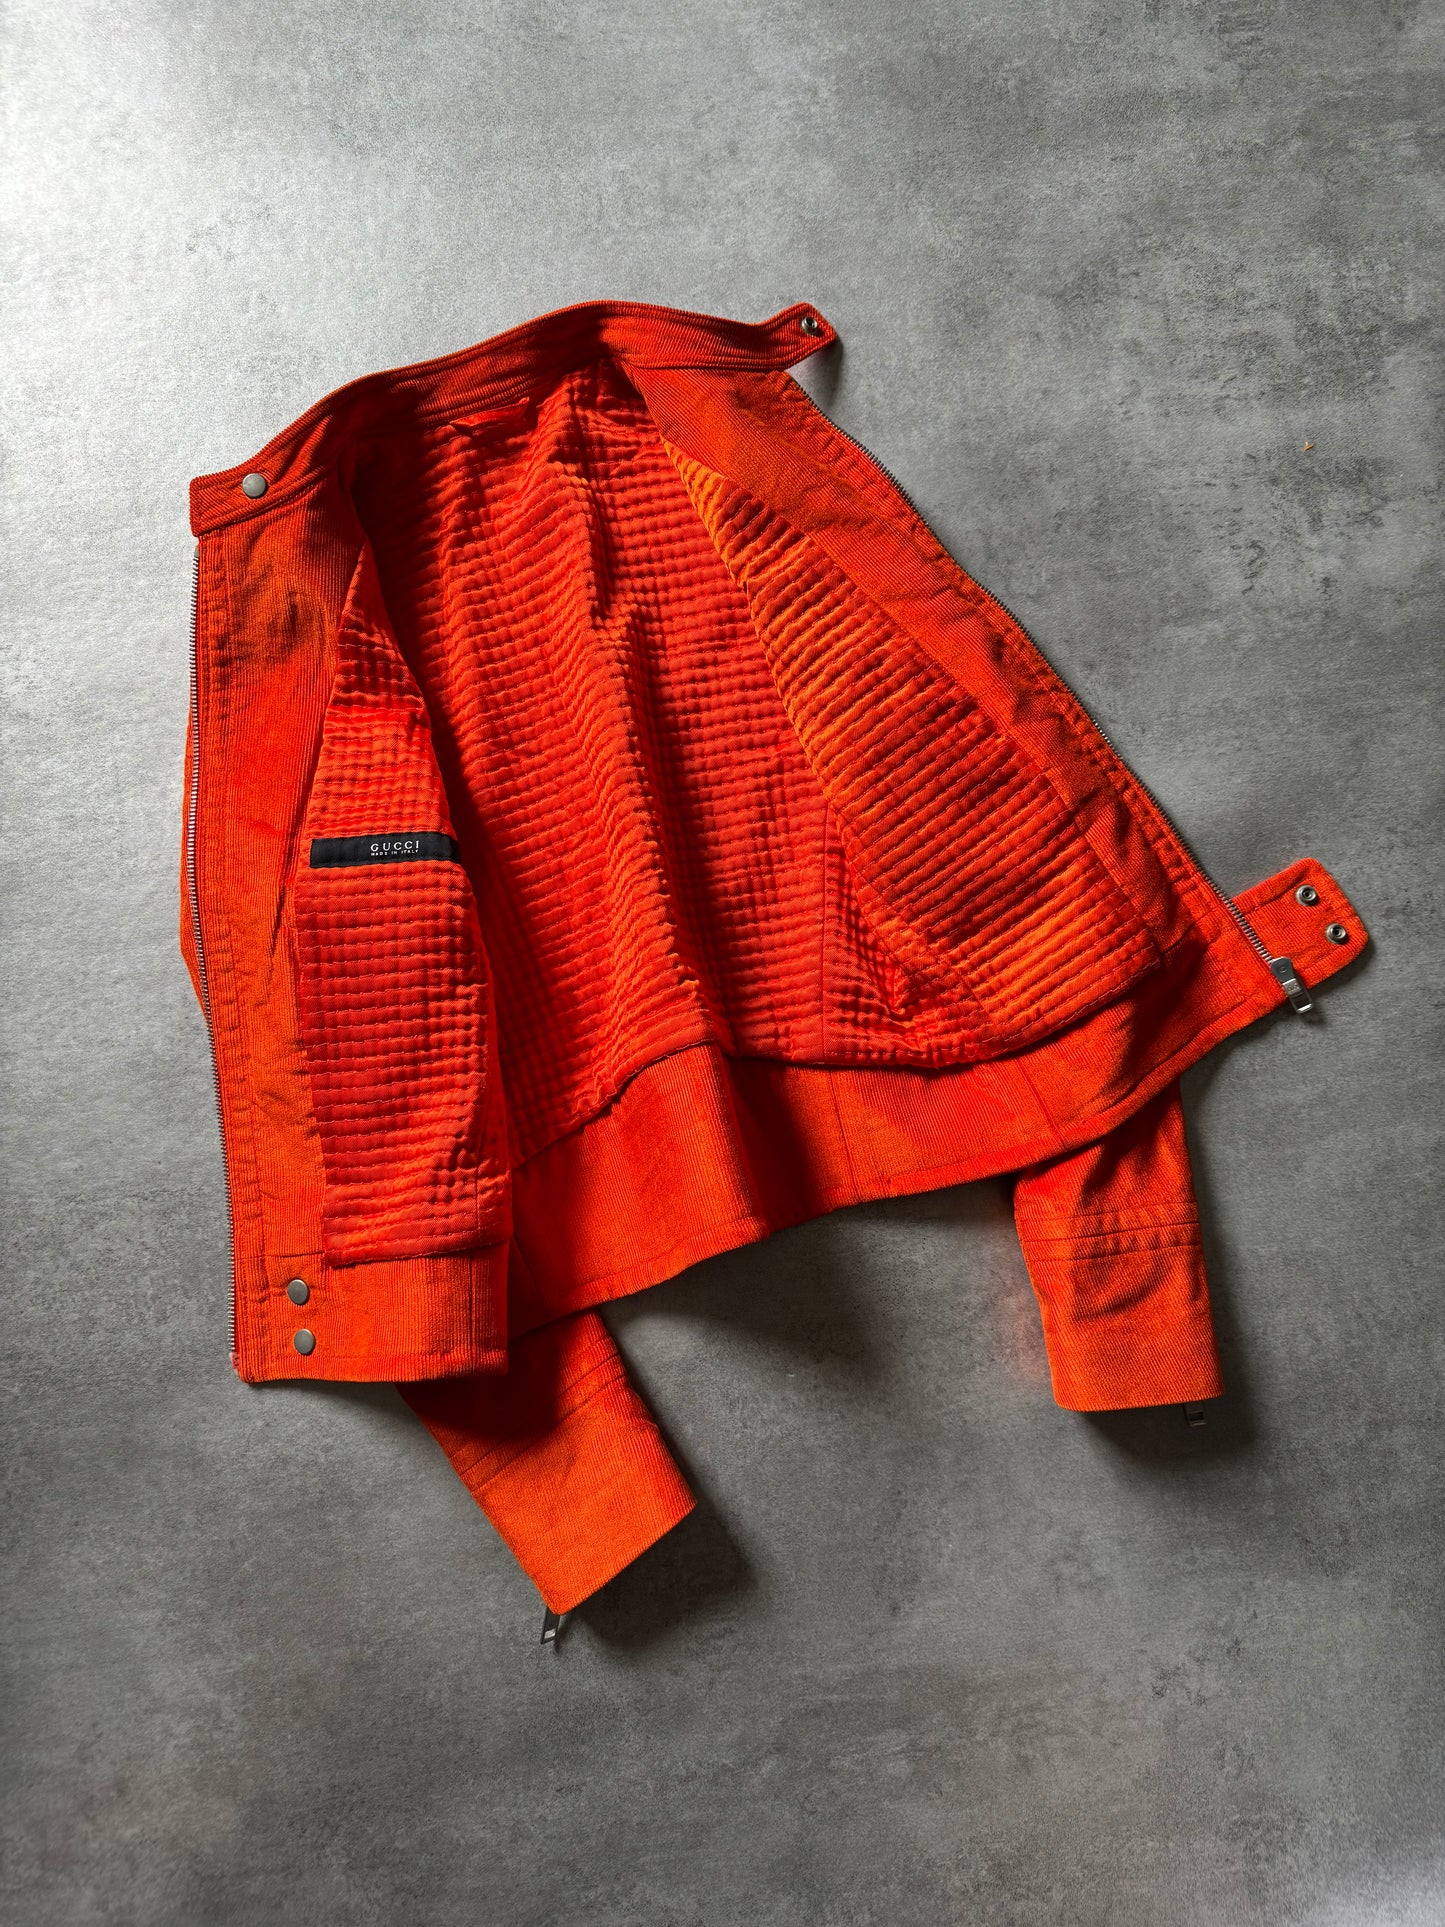 FW1999 Gucci Orange Biker Jacket by Tom Ford (S) - 3